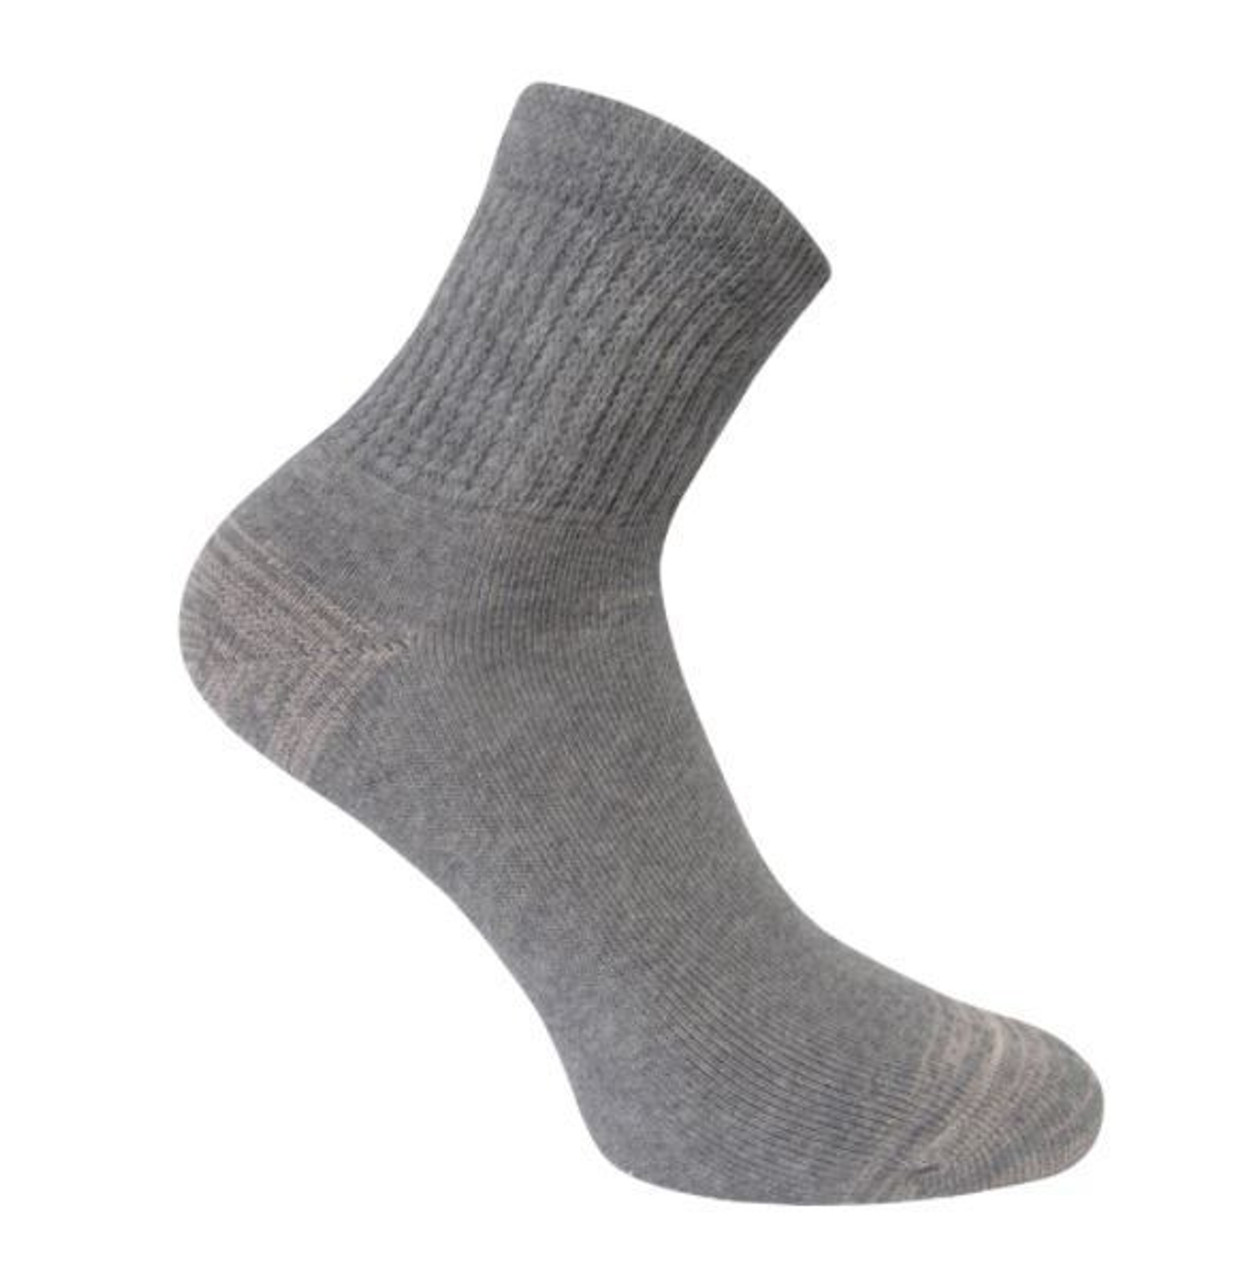 Active Pro Diabetic Socks Size 10-13 Ankle 3 Pair Pack -Gray - Diabetic ...